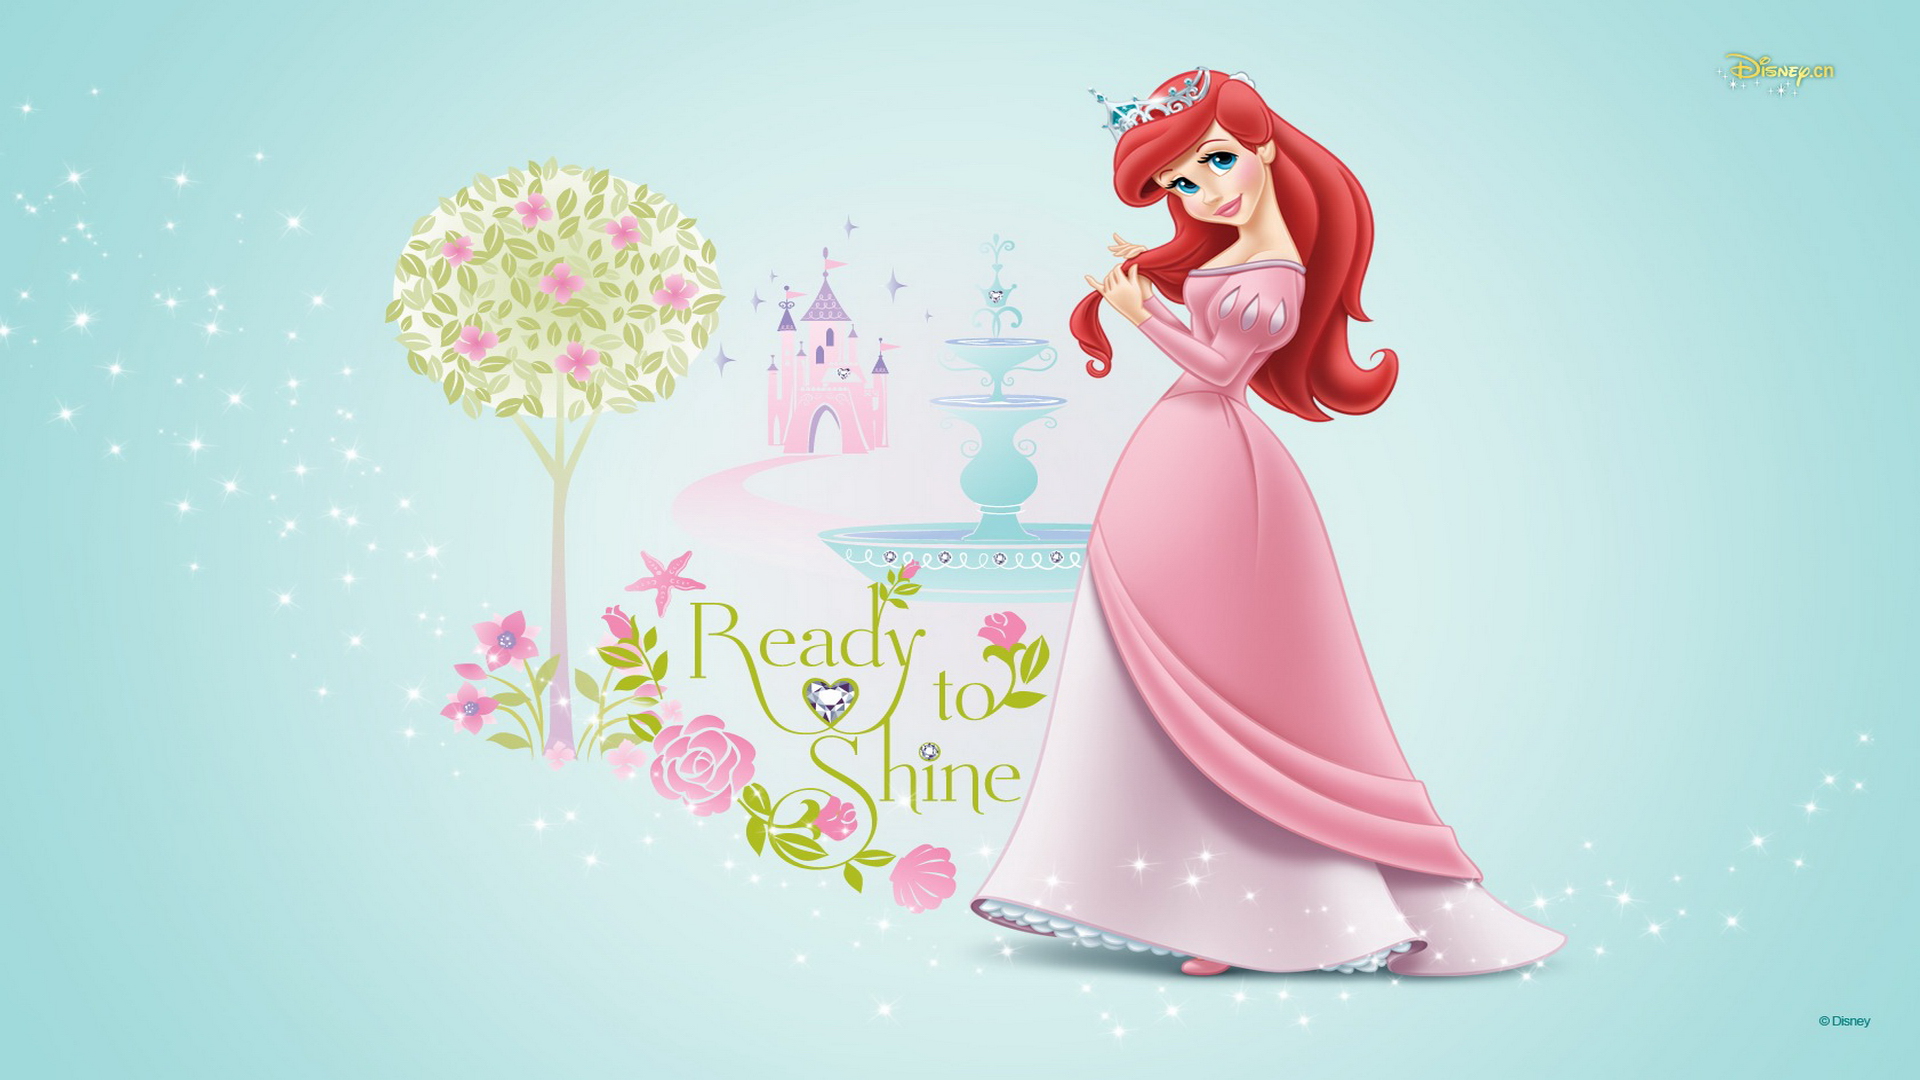 Disney Princess Ariel Background Wallpaper.